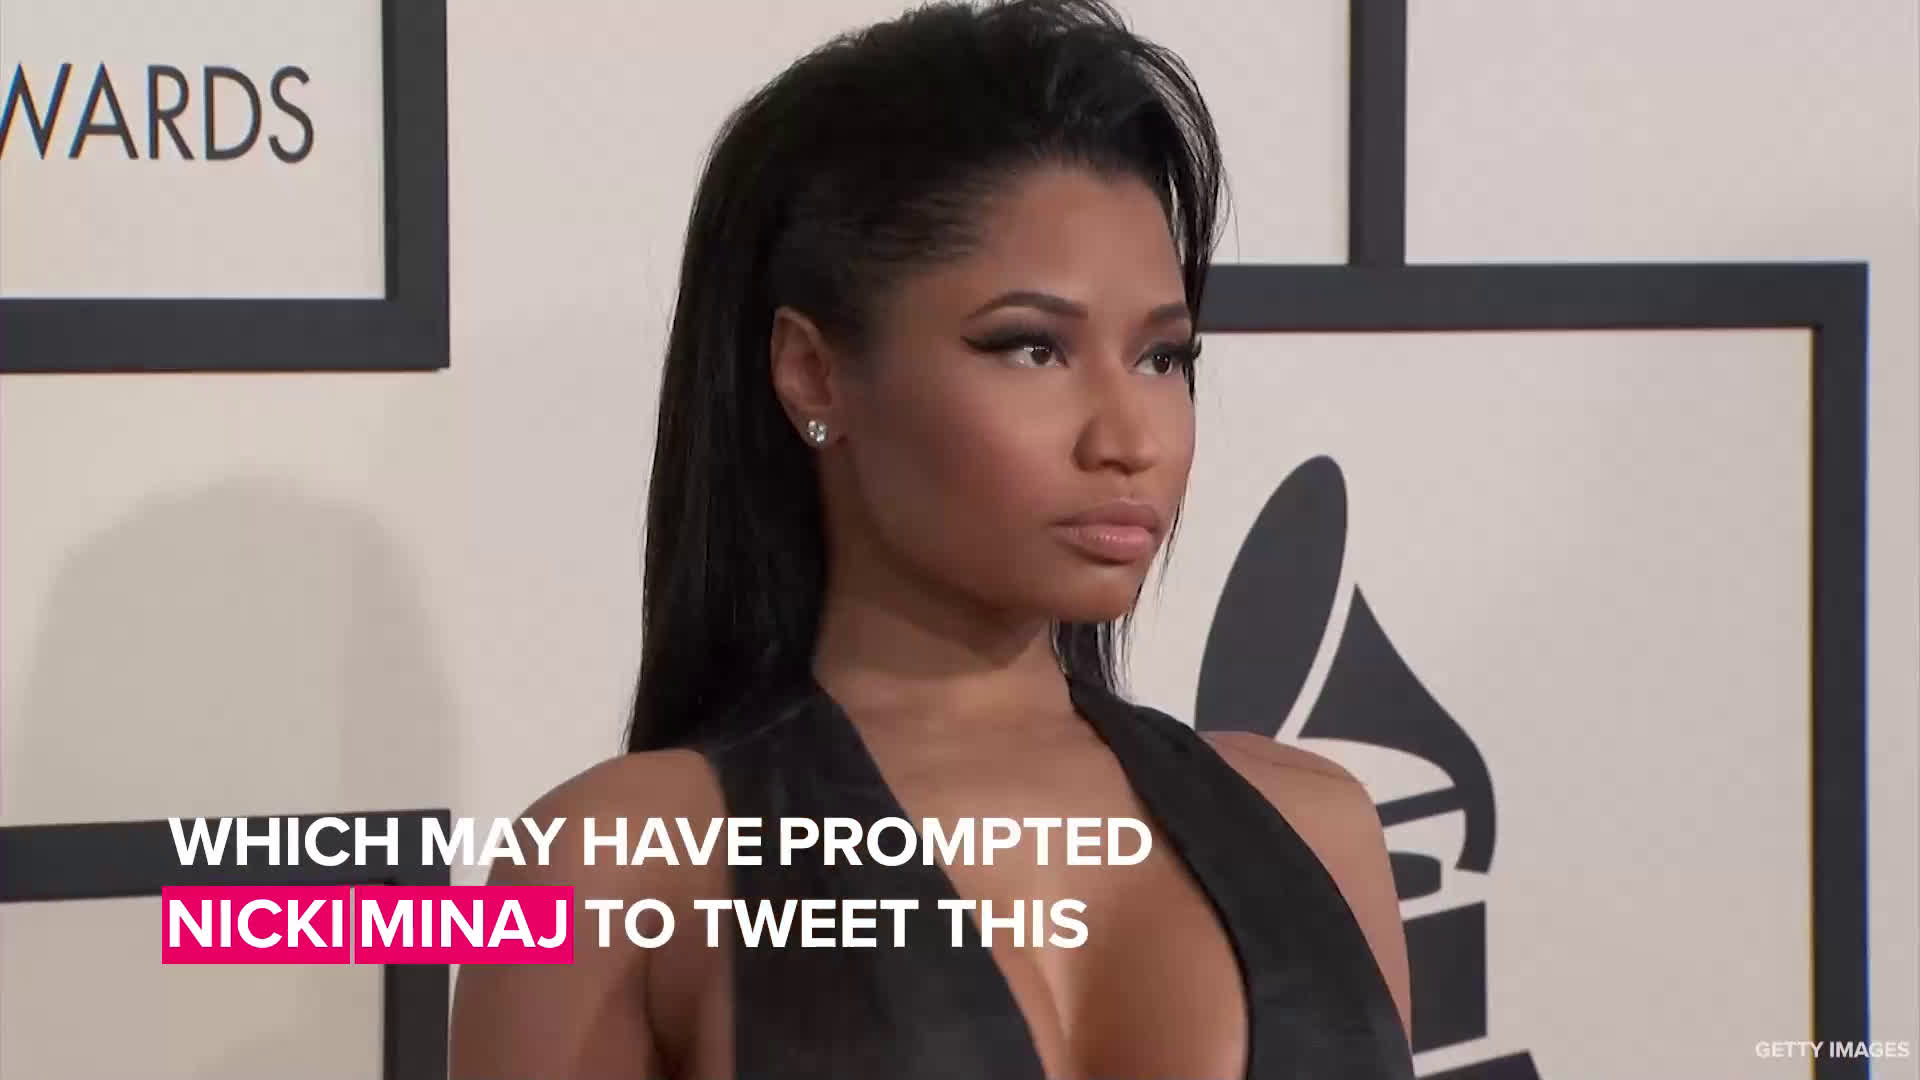 The Weeknd, Nicki Minaj & Justin Bieber speak out against the Grammys